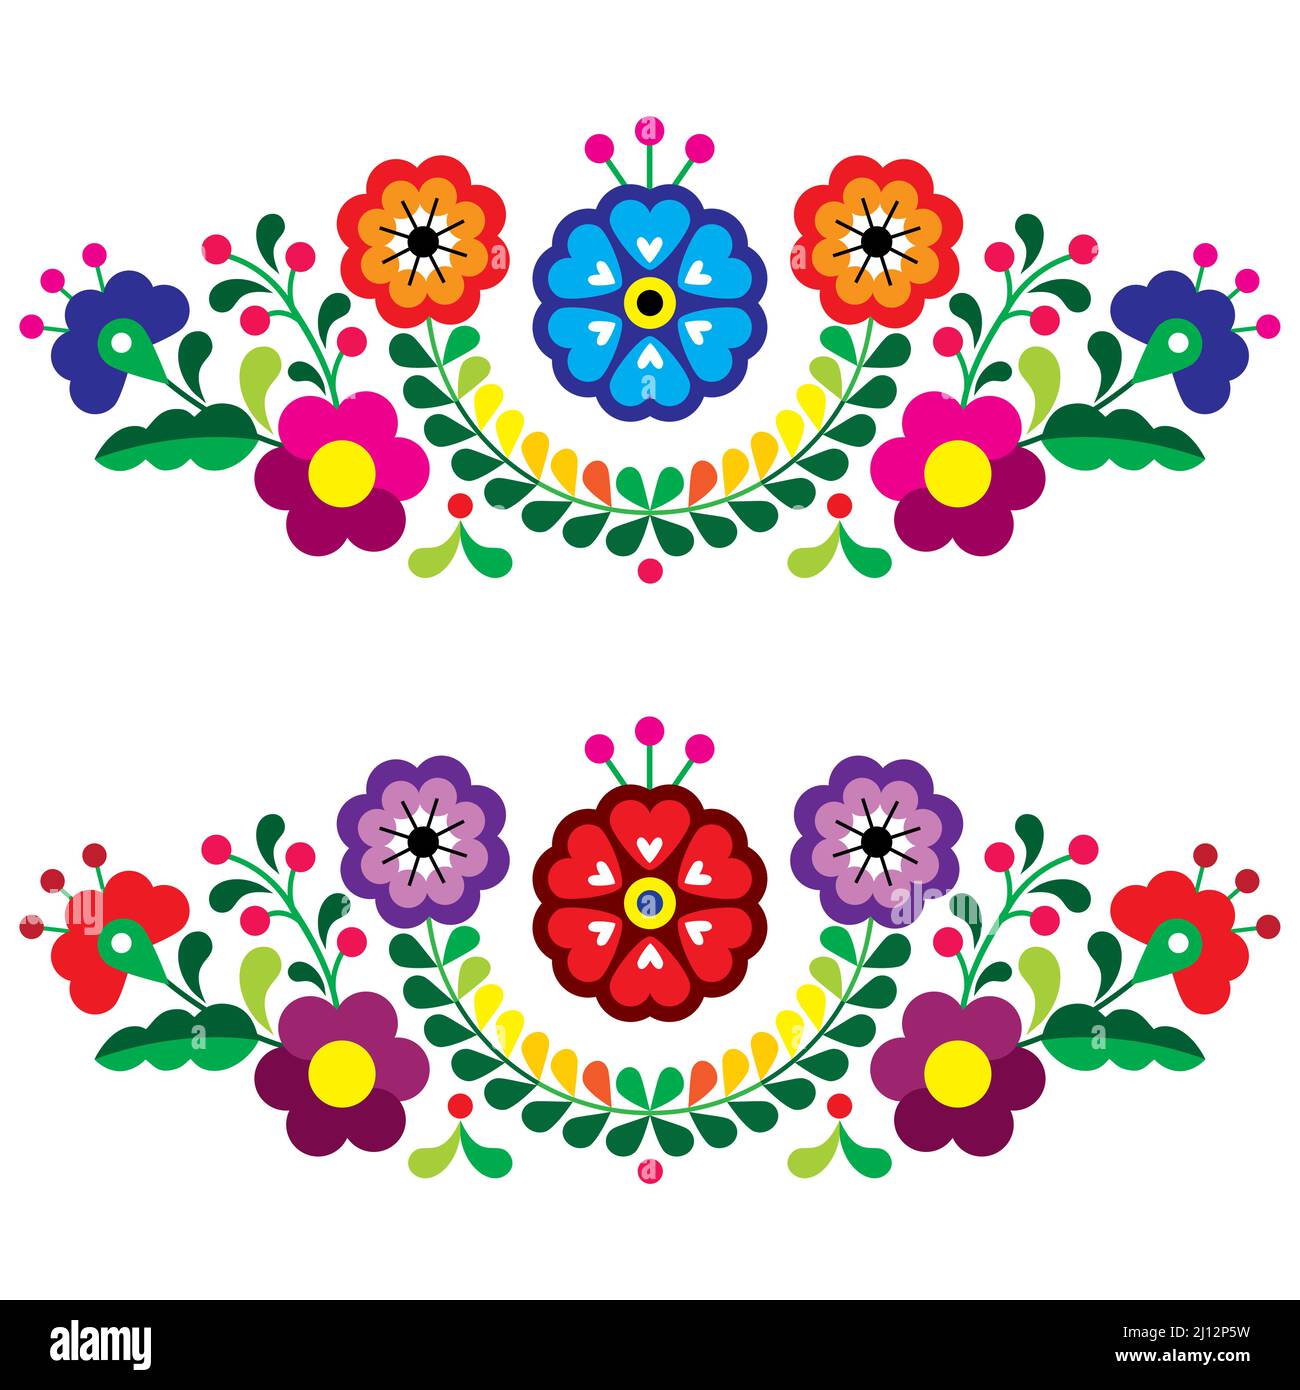 Boho Folk Floral Patterns By Flora Wild Designs